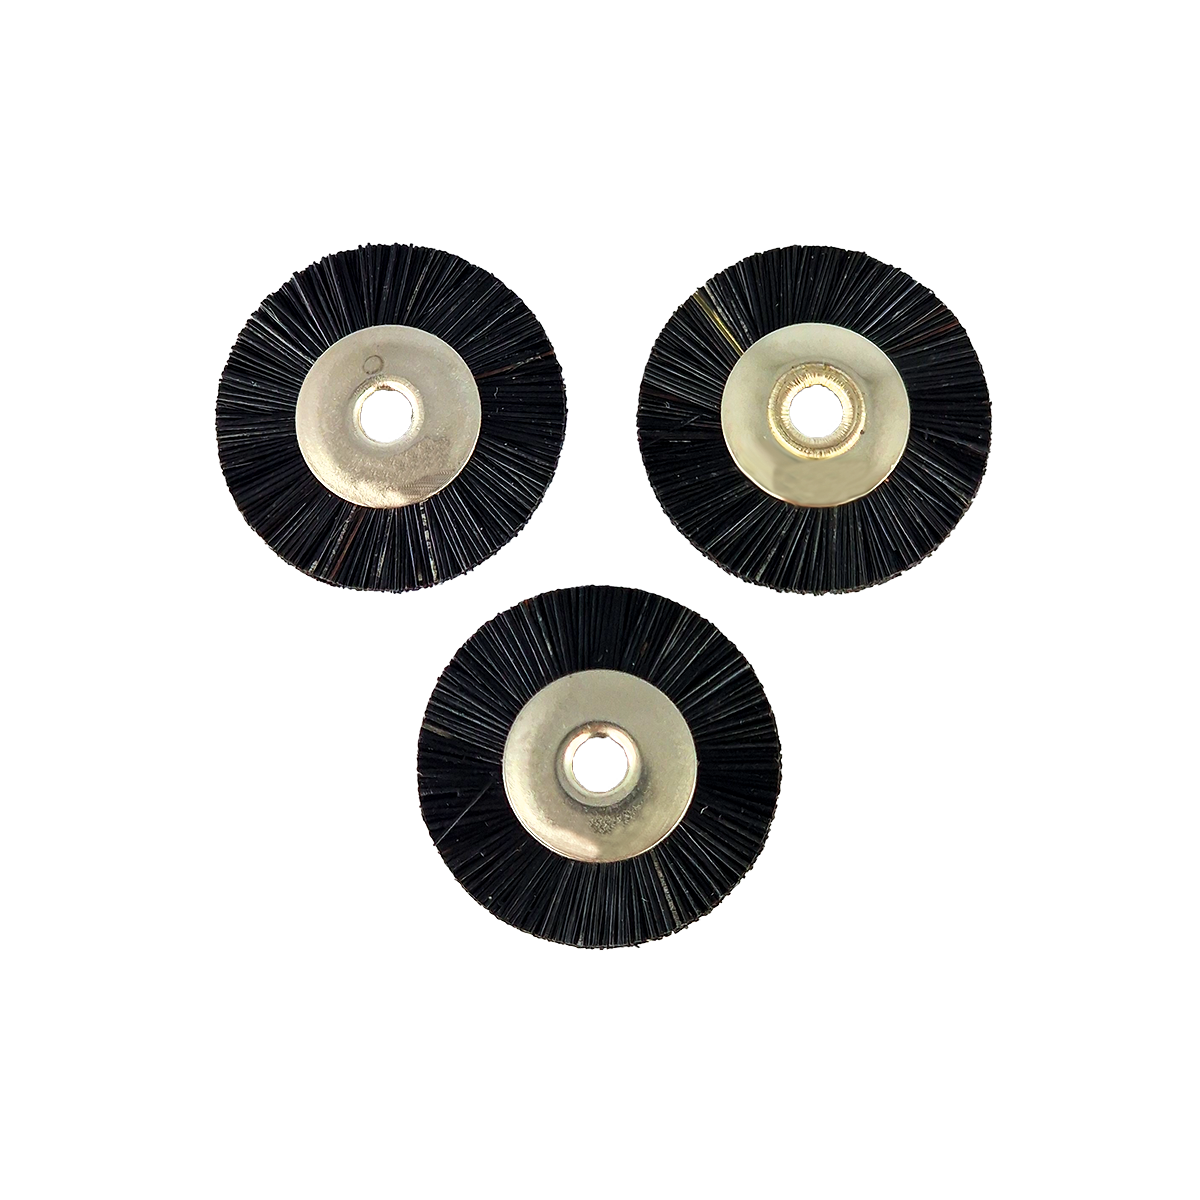 Miniaturbürste aus Chungking-Borsten, 19 mm, schwarz/hart, 100 Stück